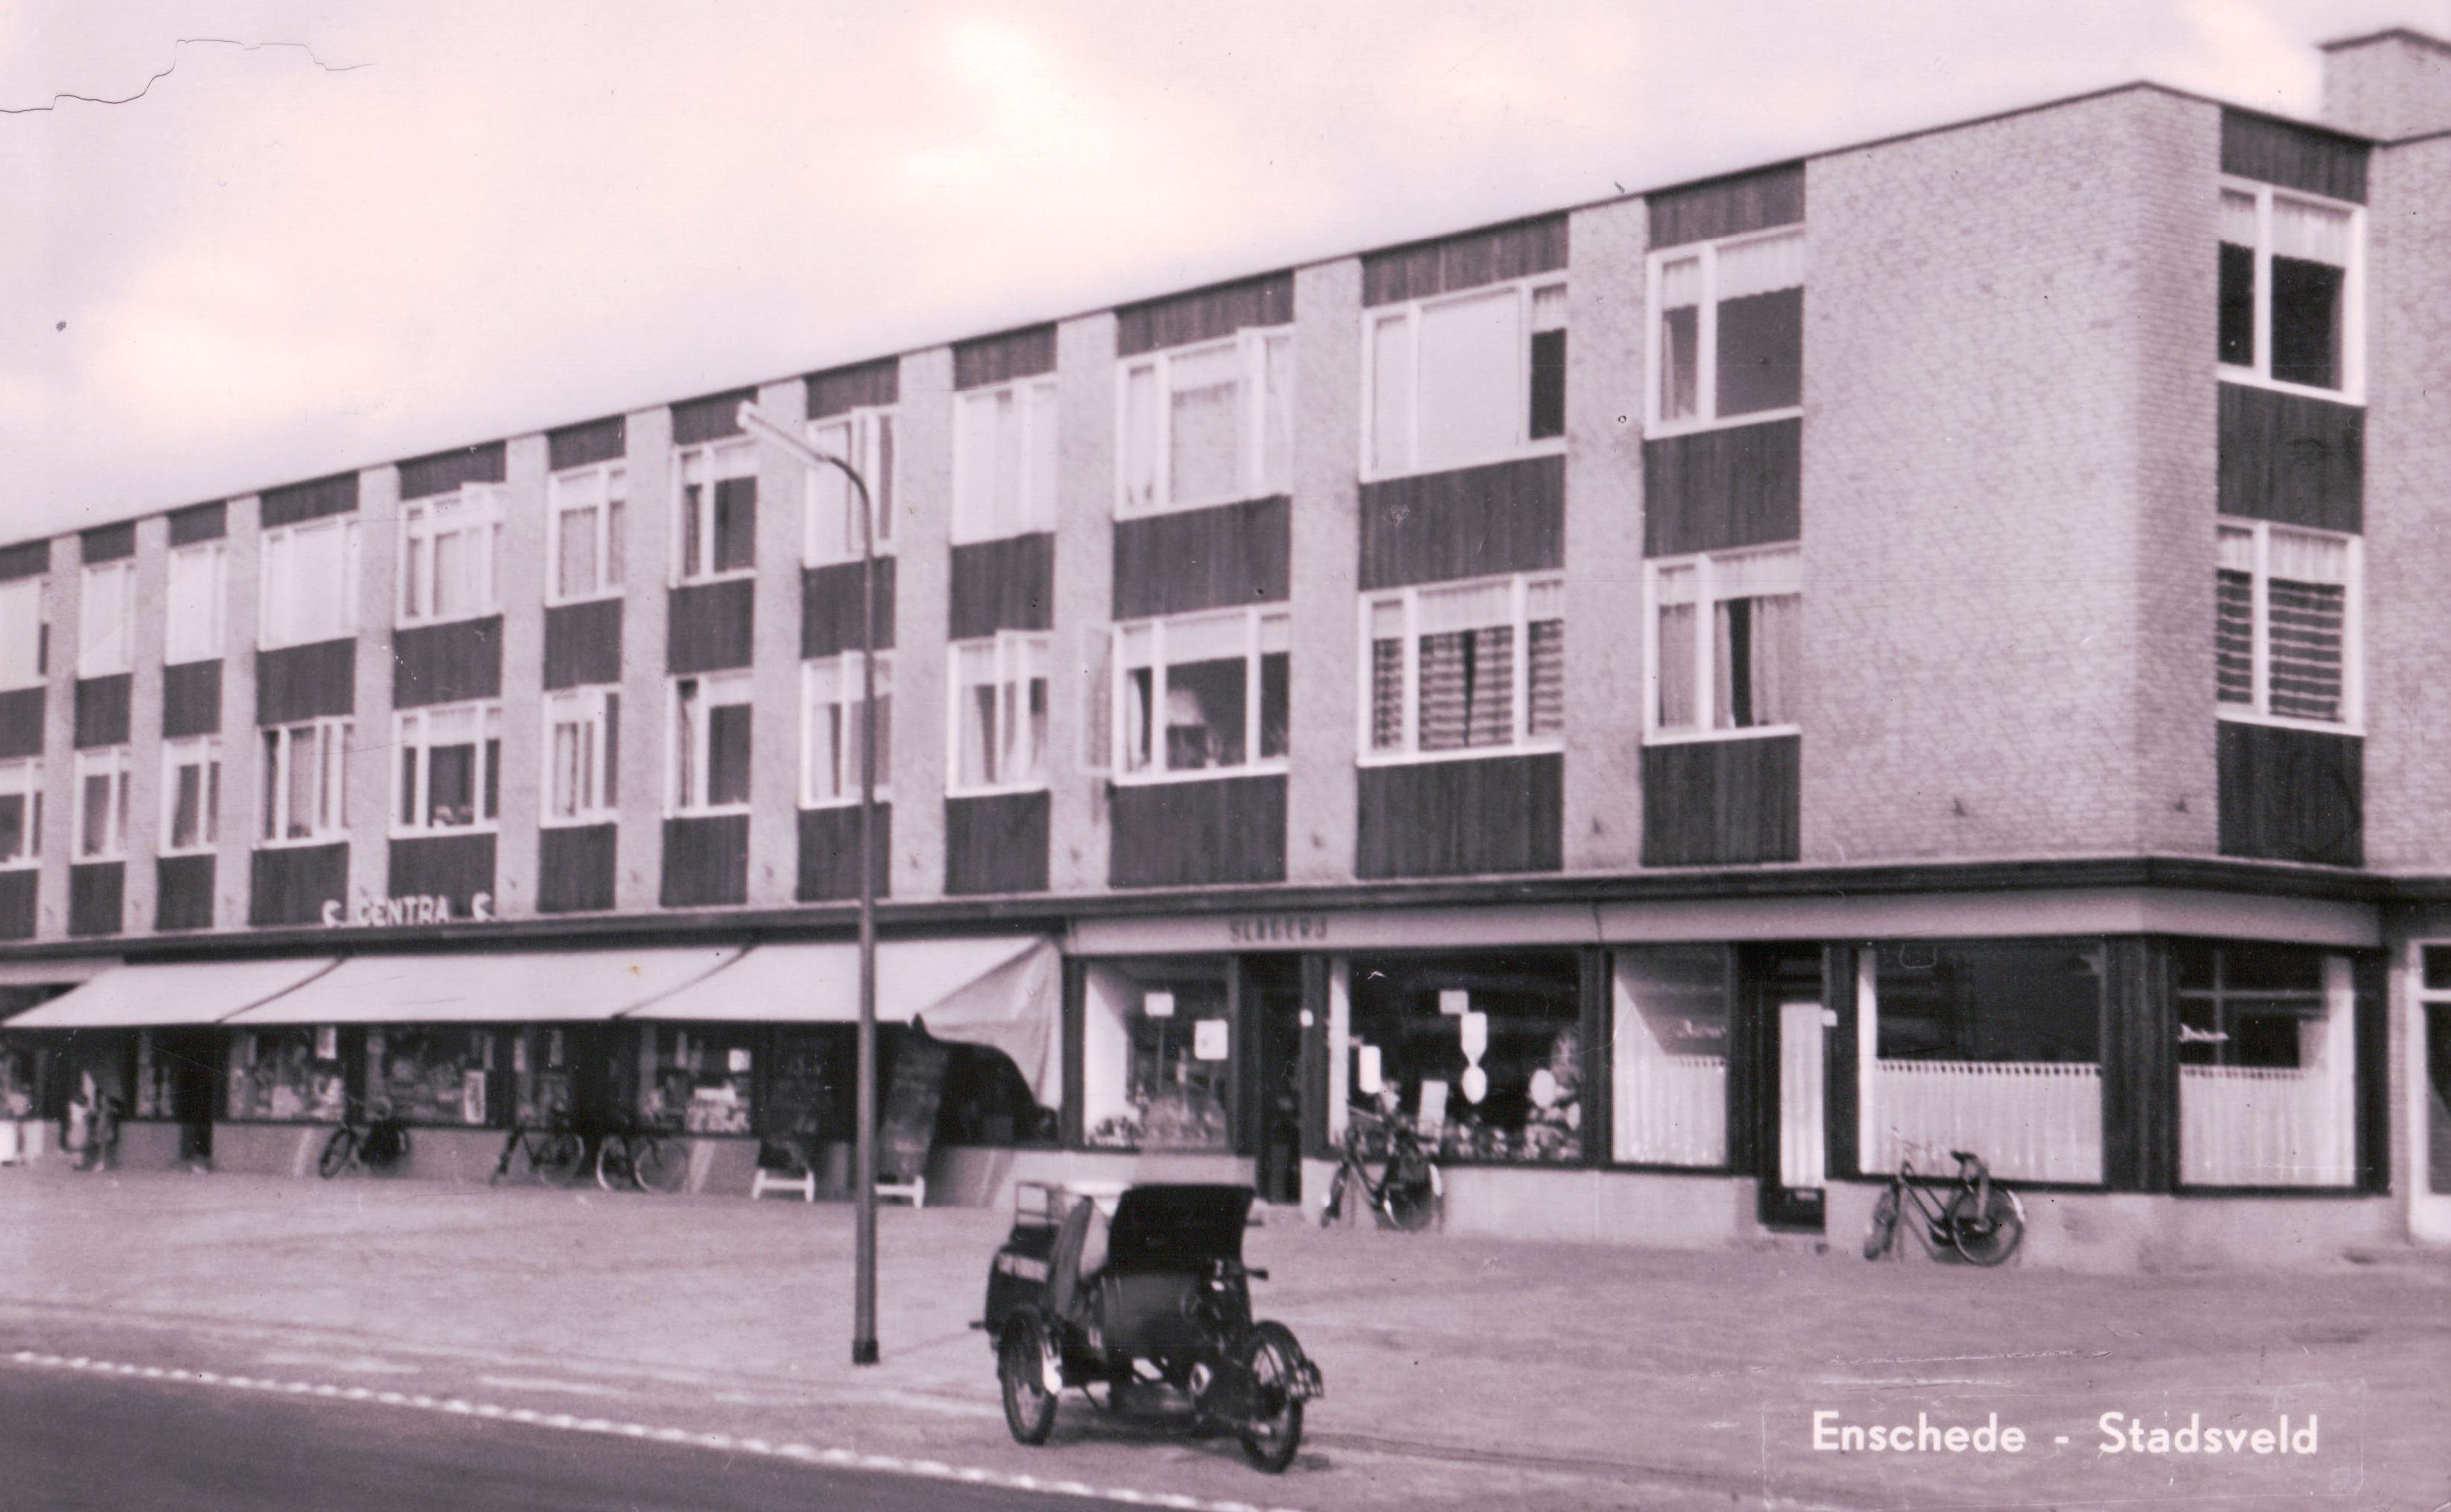 Winkelcentrum-stadsveld-1959-886c346d.jpg